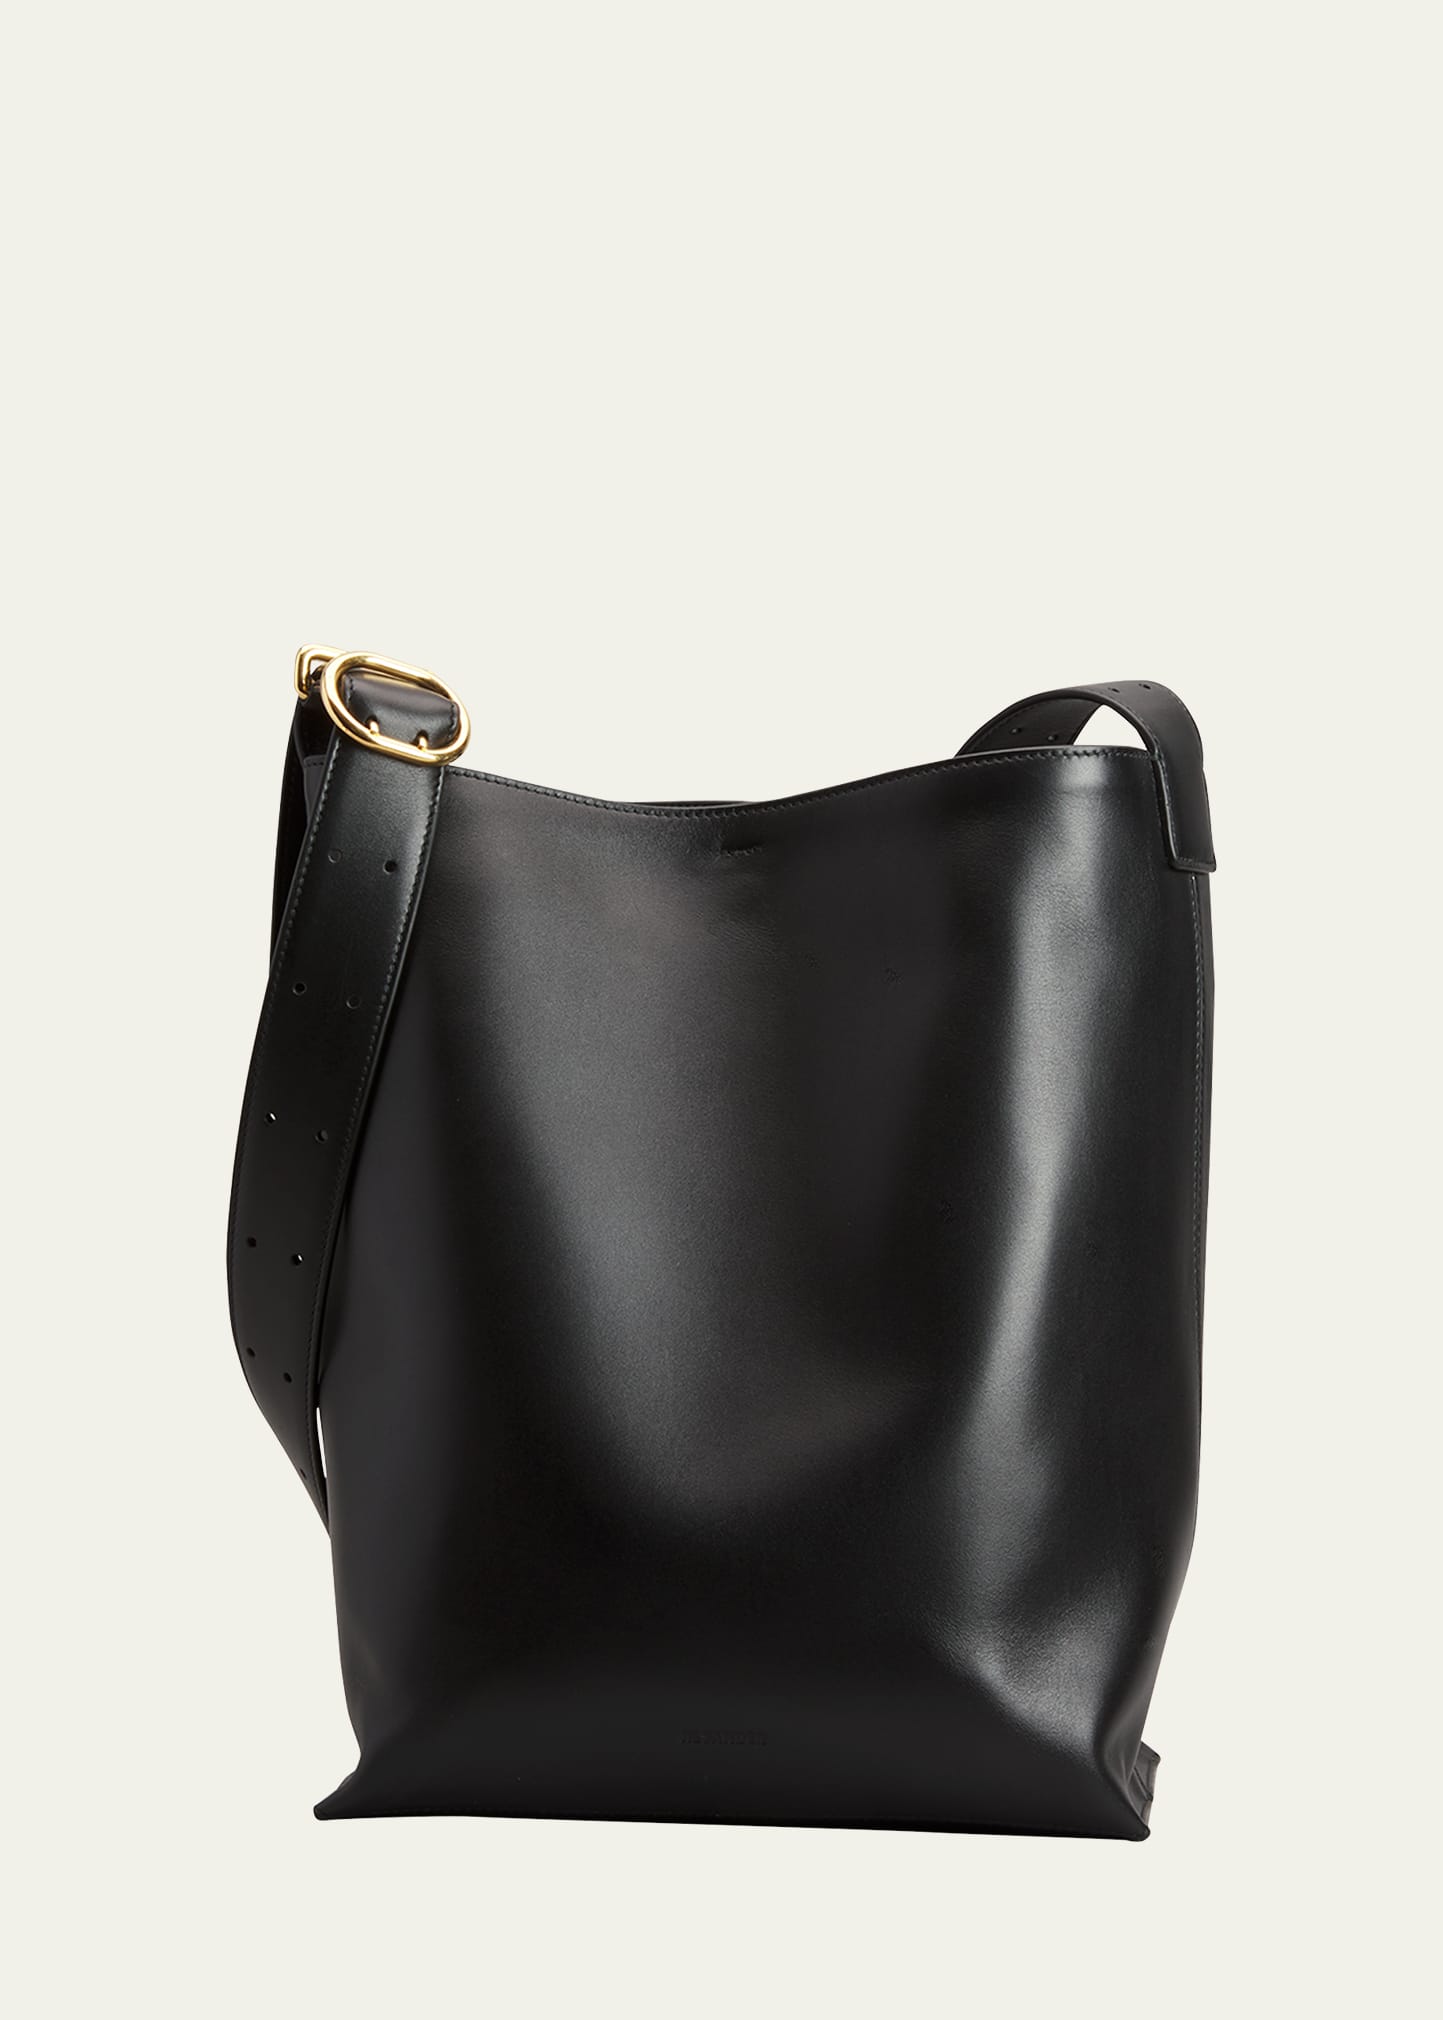 Cannolo Mini Bag - Jil Sander - Leather - Beige